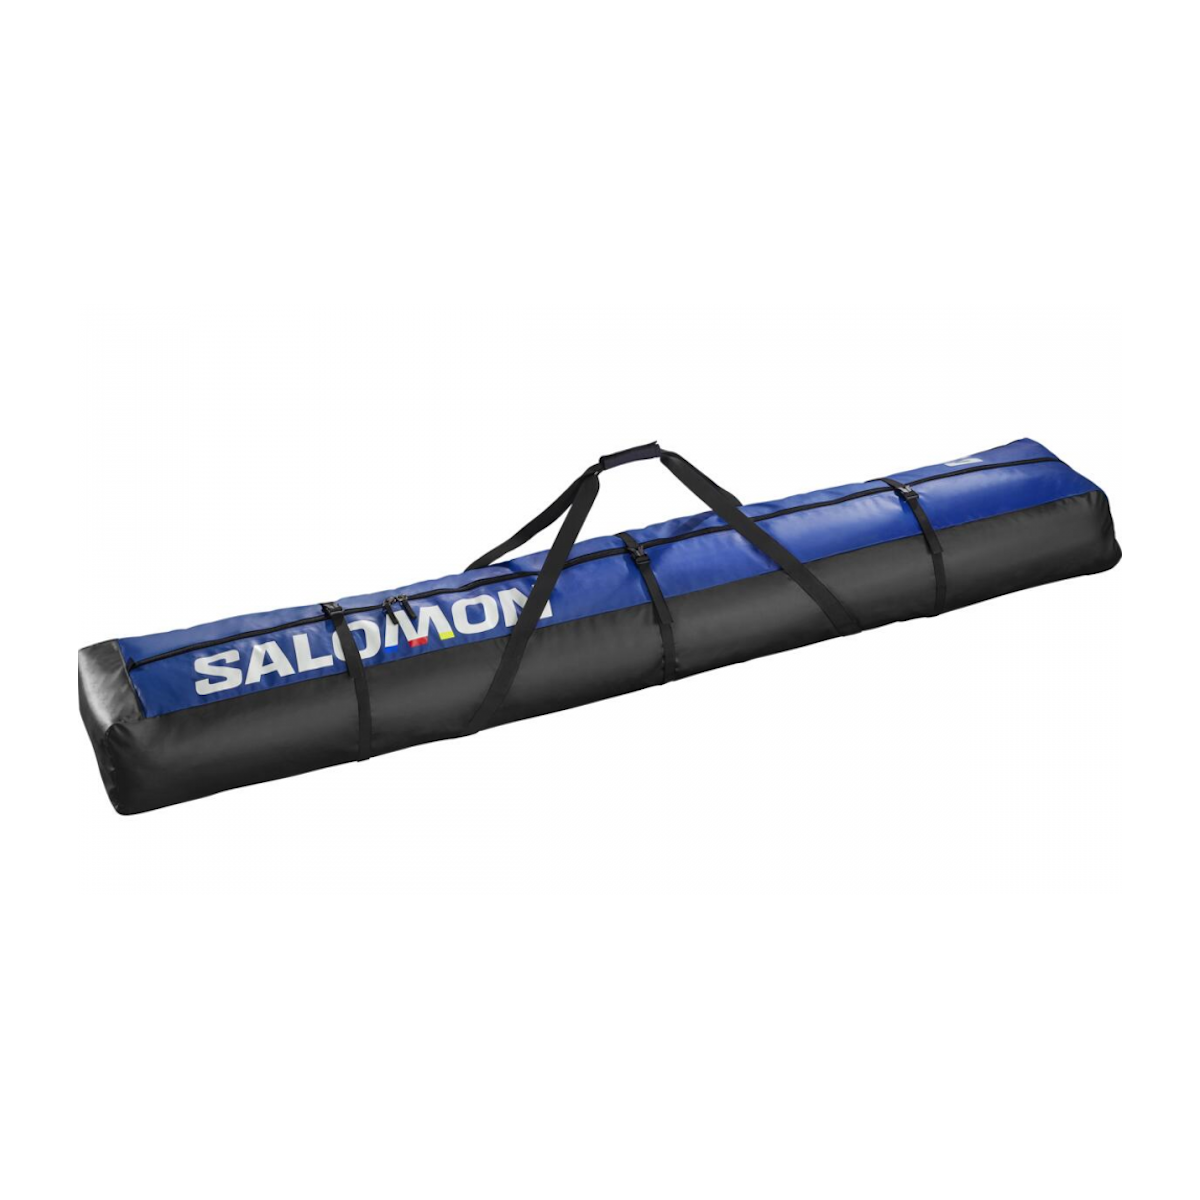 SALOMON SKI SLEEVE 220CM ski bag - blue/black